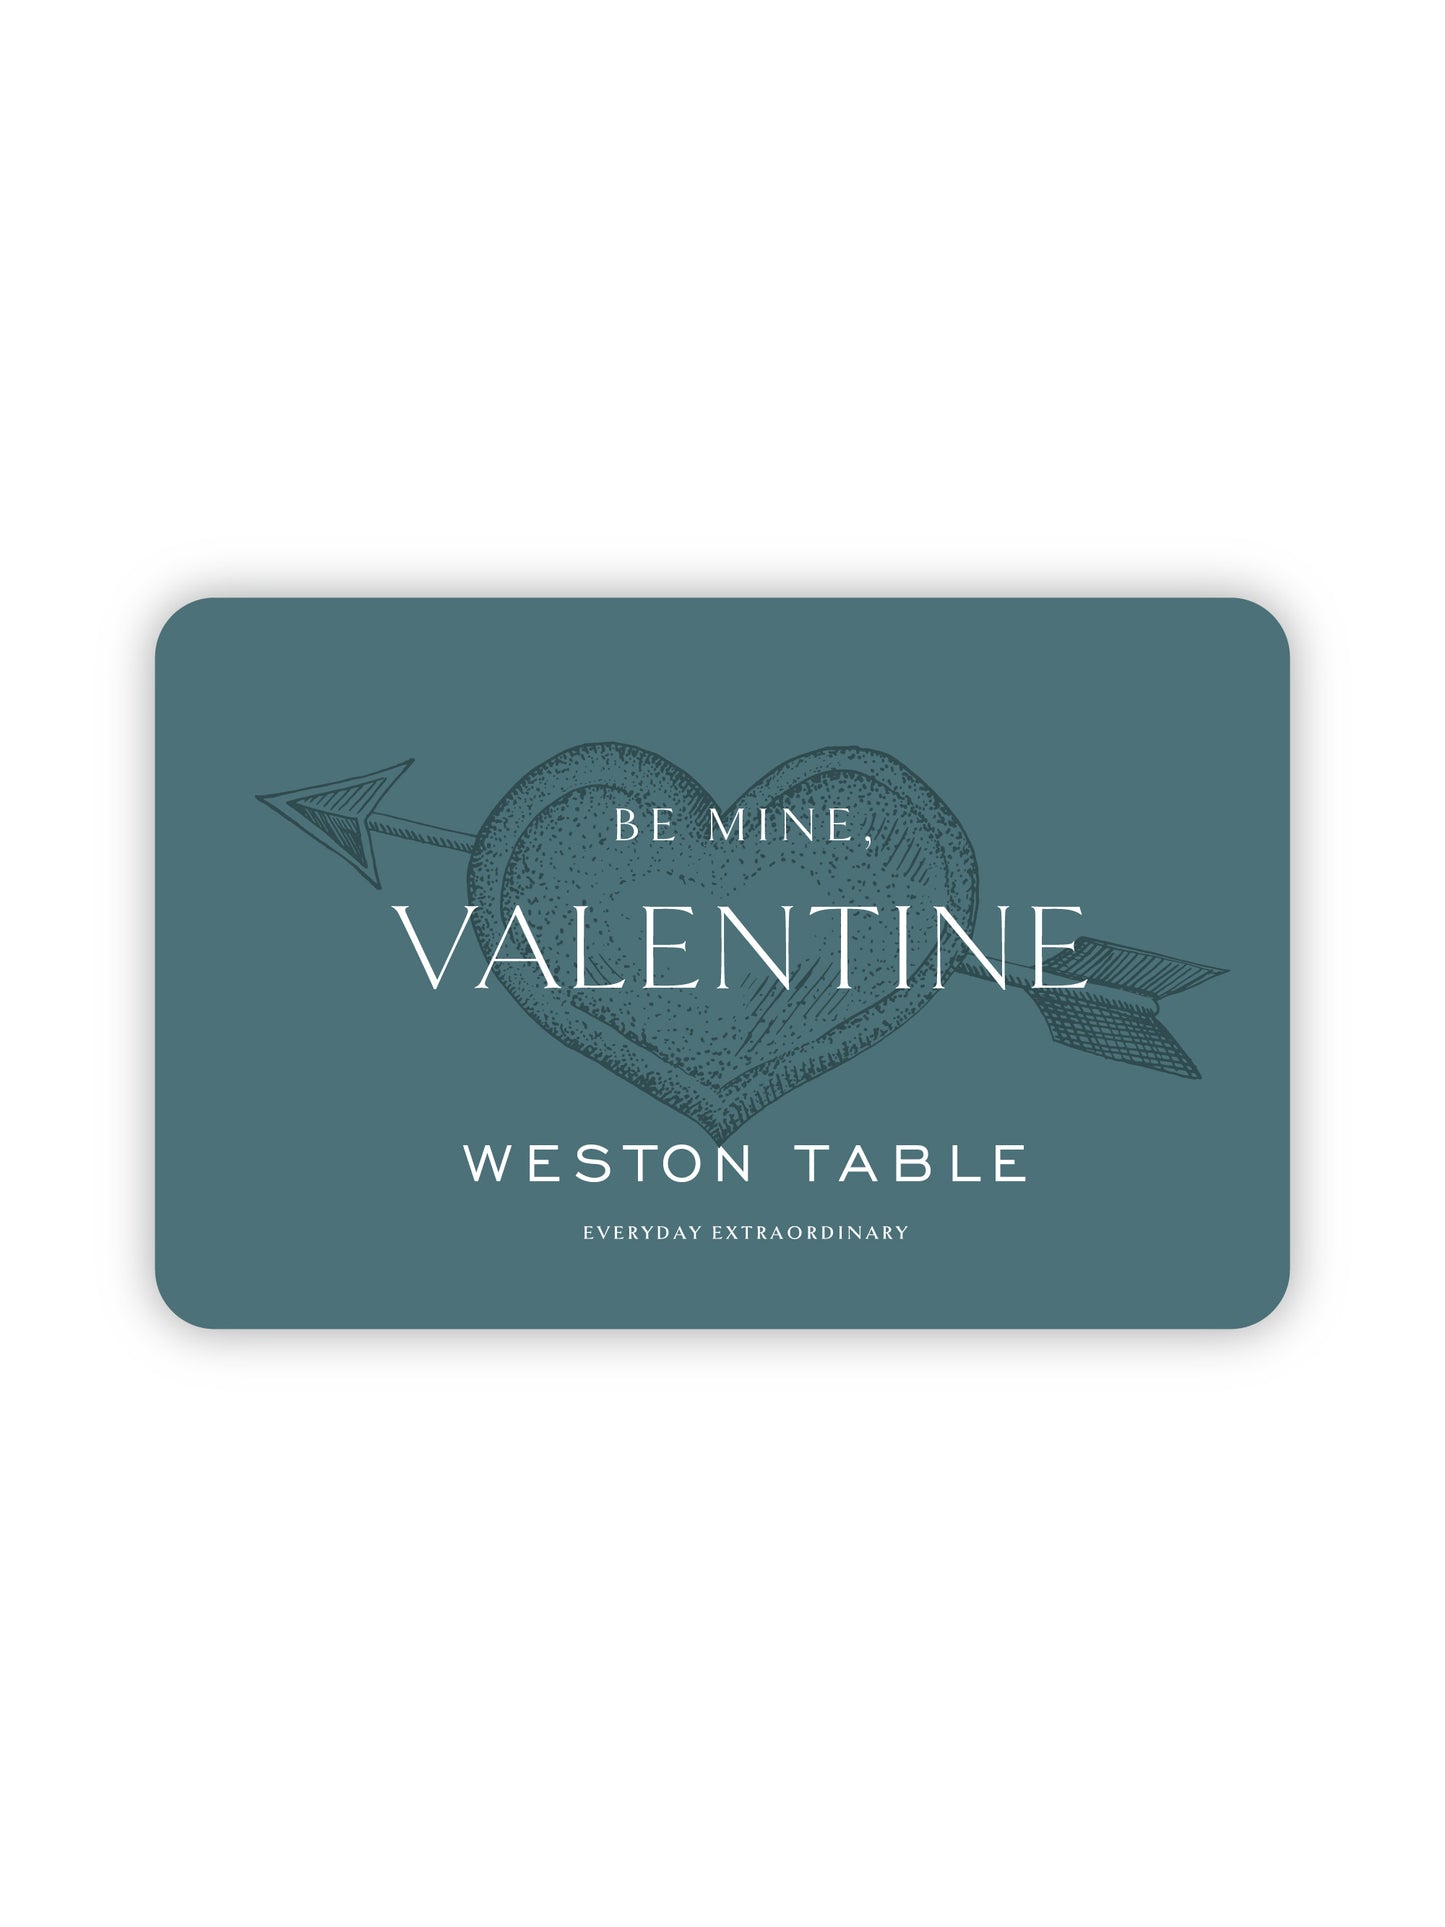 Be Mine, Valentine Digital Gift Card